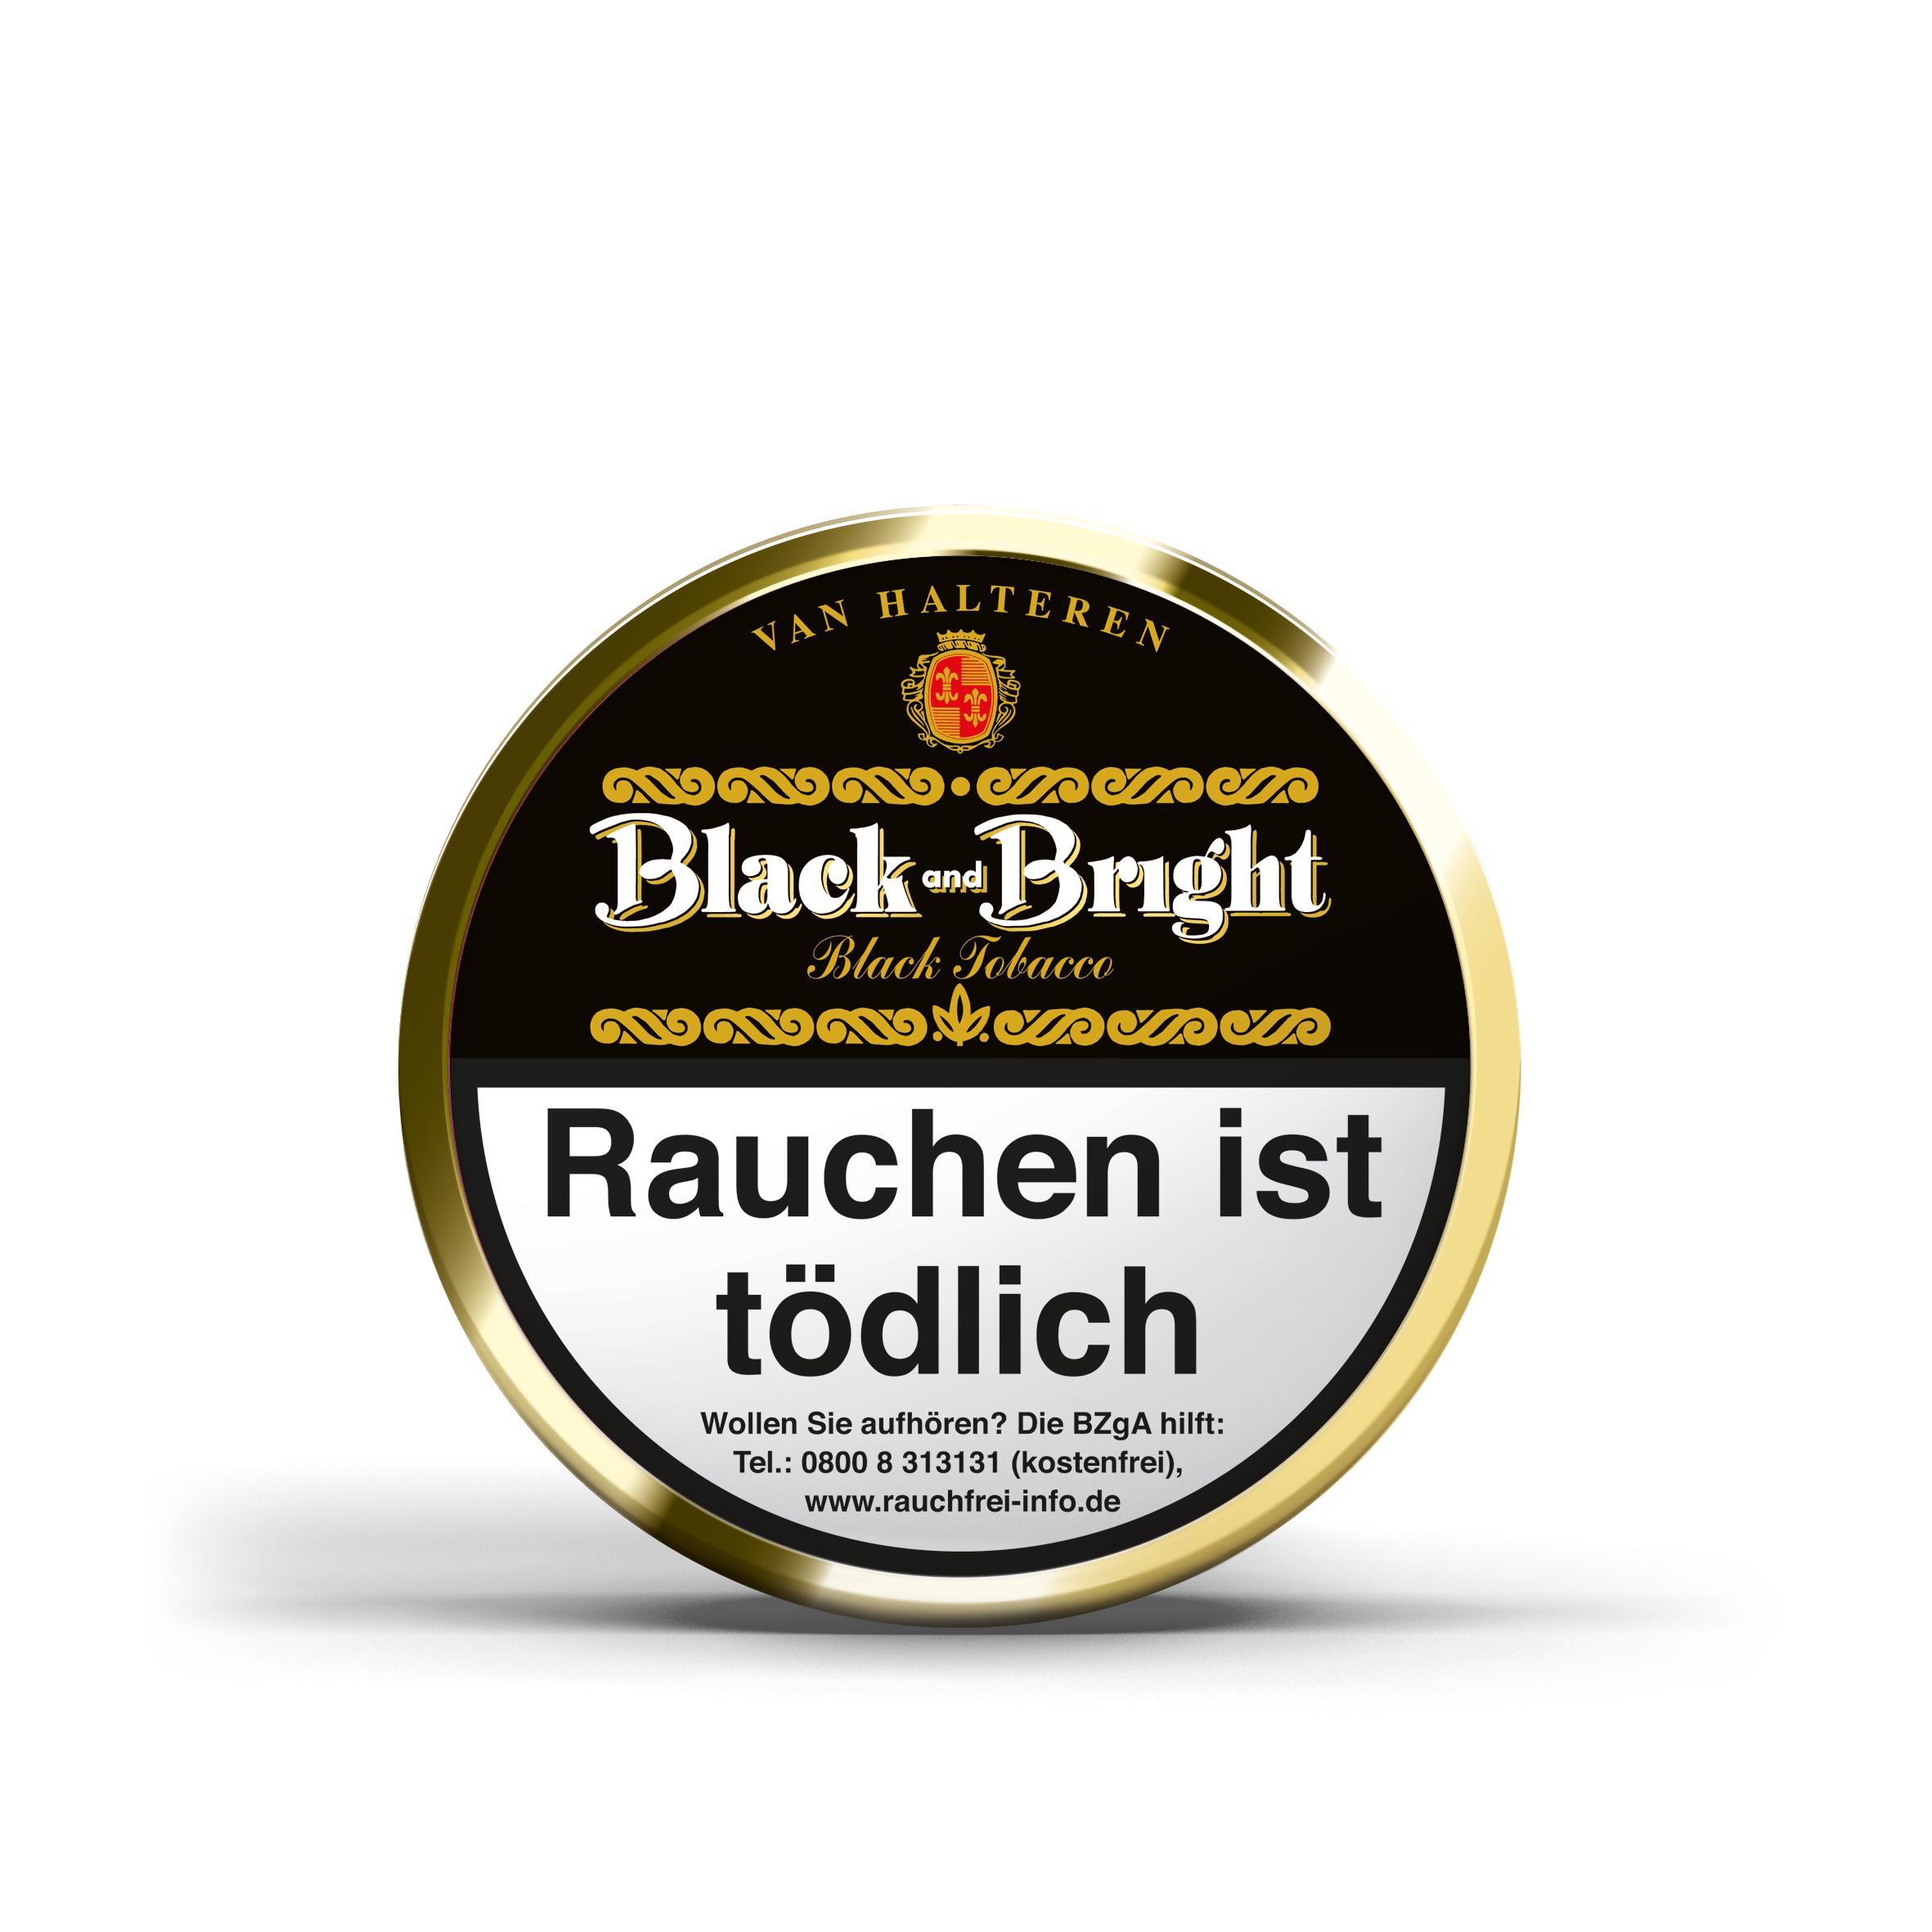 Van Halteren Black & Bright Pfeifentabak 1 x 100g Krüll